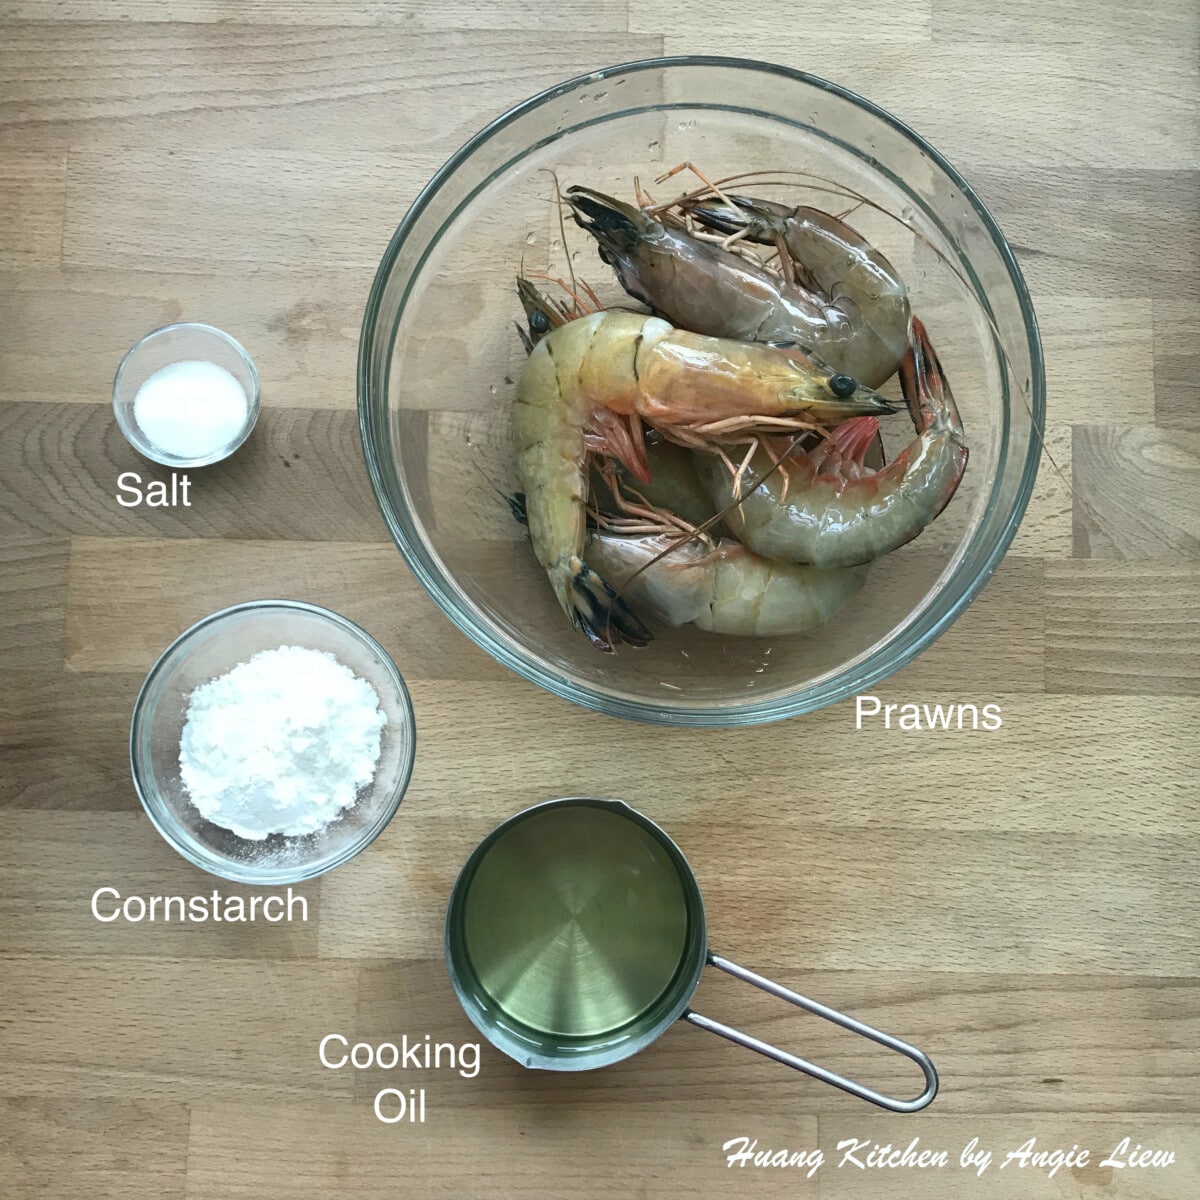 Ingredients to deep fry prawns